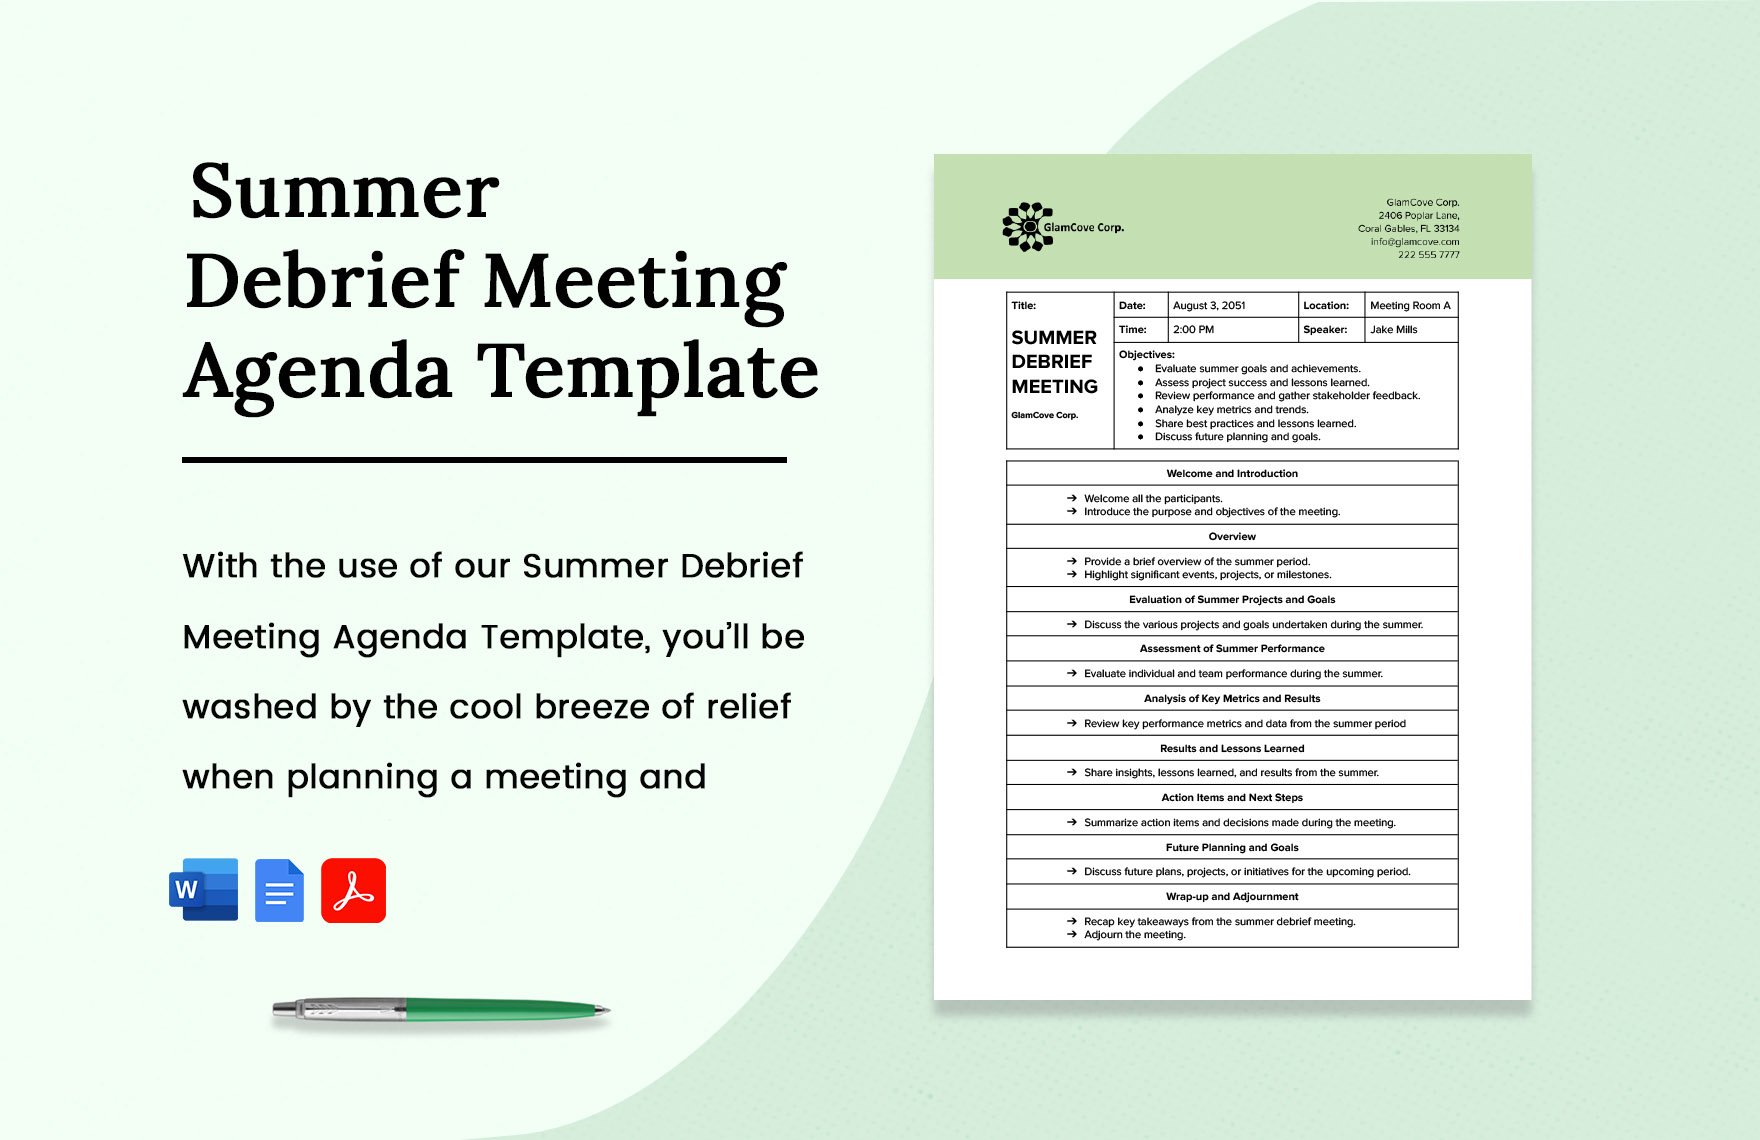 Summer Debrief Meeting Agenda in Word, Google Docs, PDF